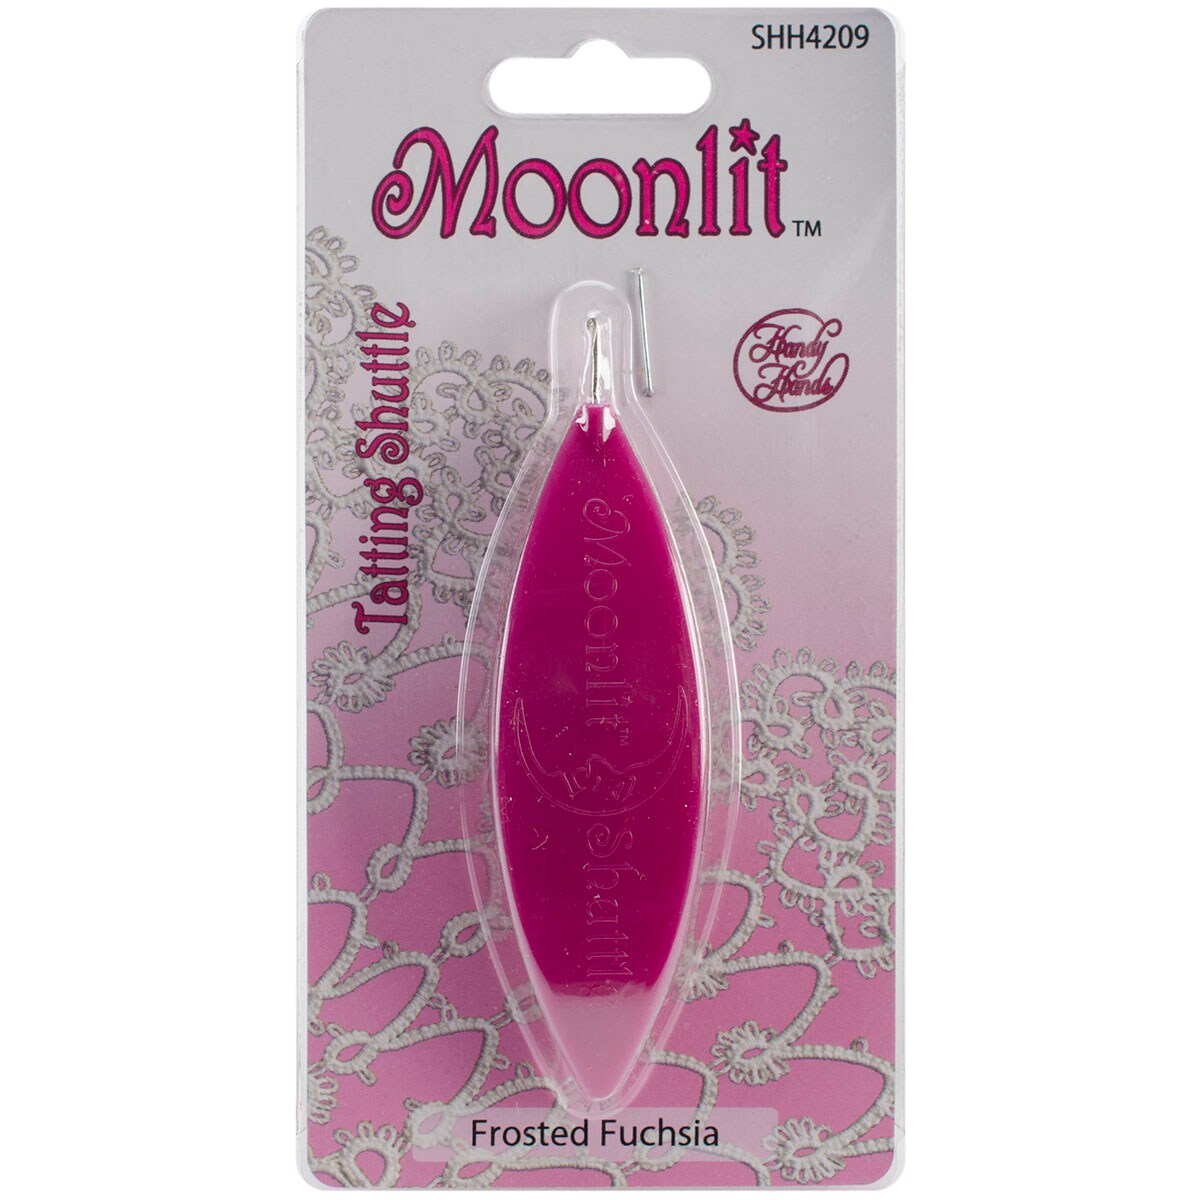 Handy Hands Moonlit Tatting Shuttle W/Hook-Frosted Fuchsia